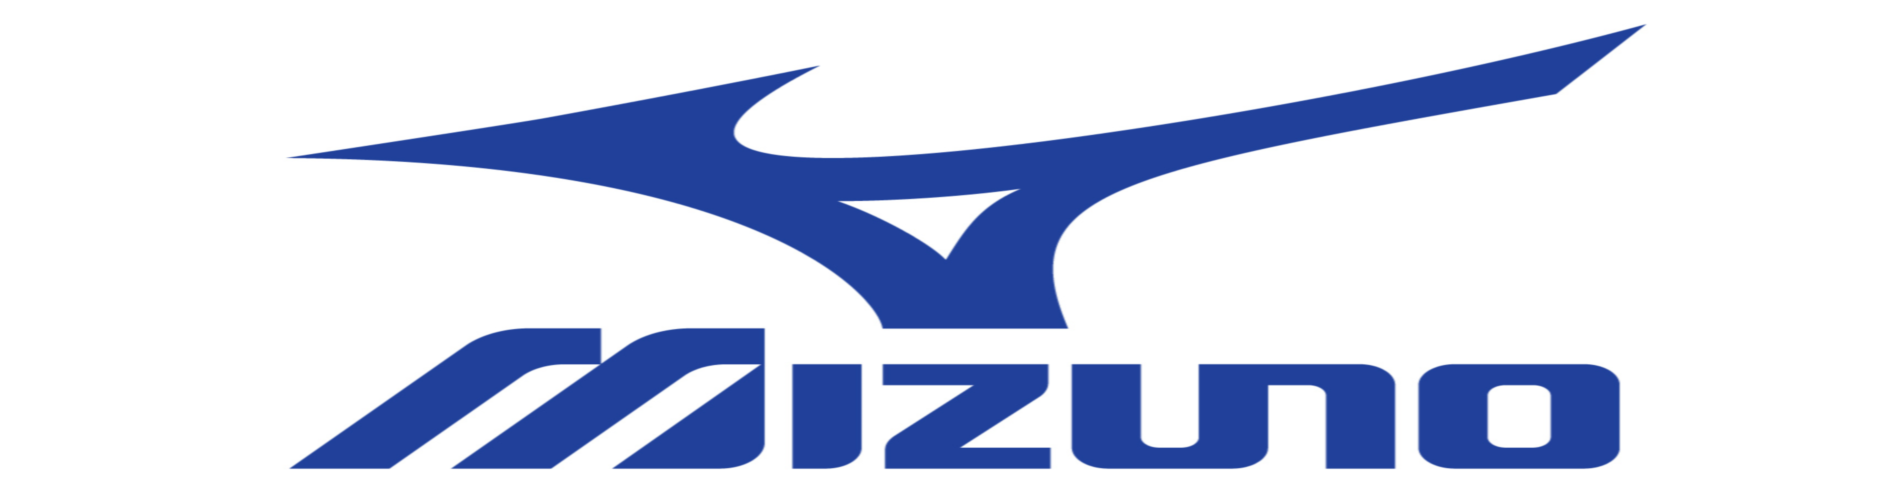 Mizuno sports brand logo, Miz